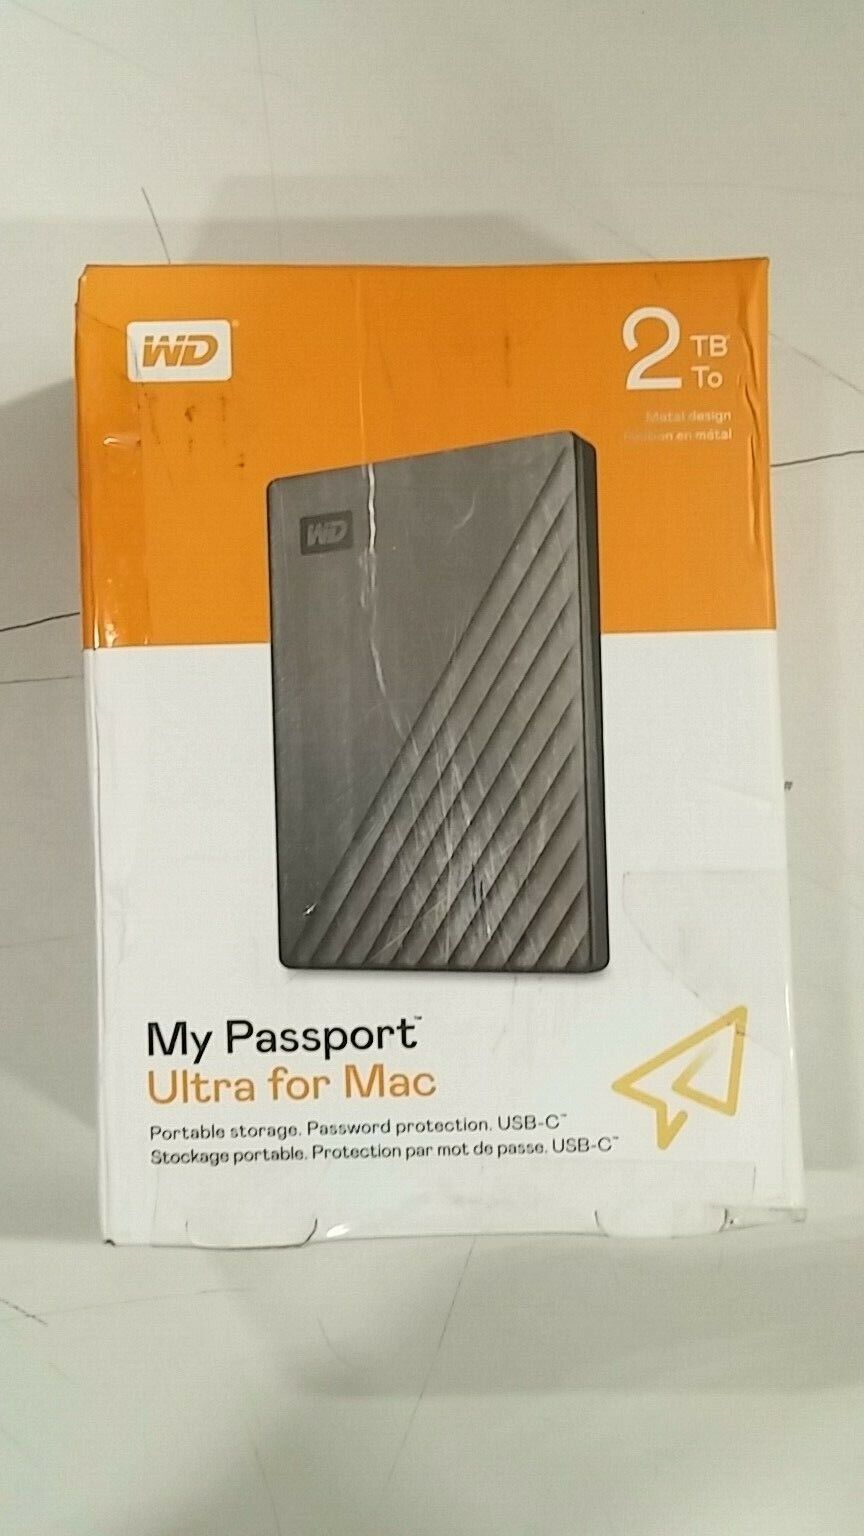 WD - My Passport Ultra for Mac 2TB External USB-C Portable Hard Drive - Silver